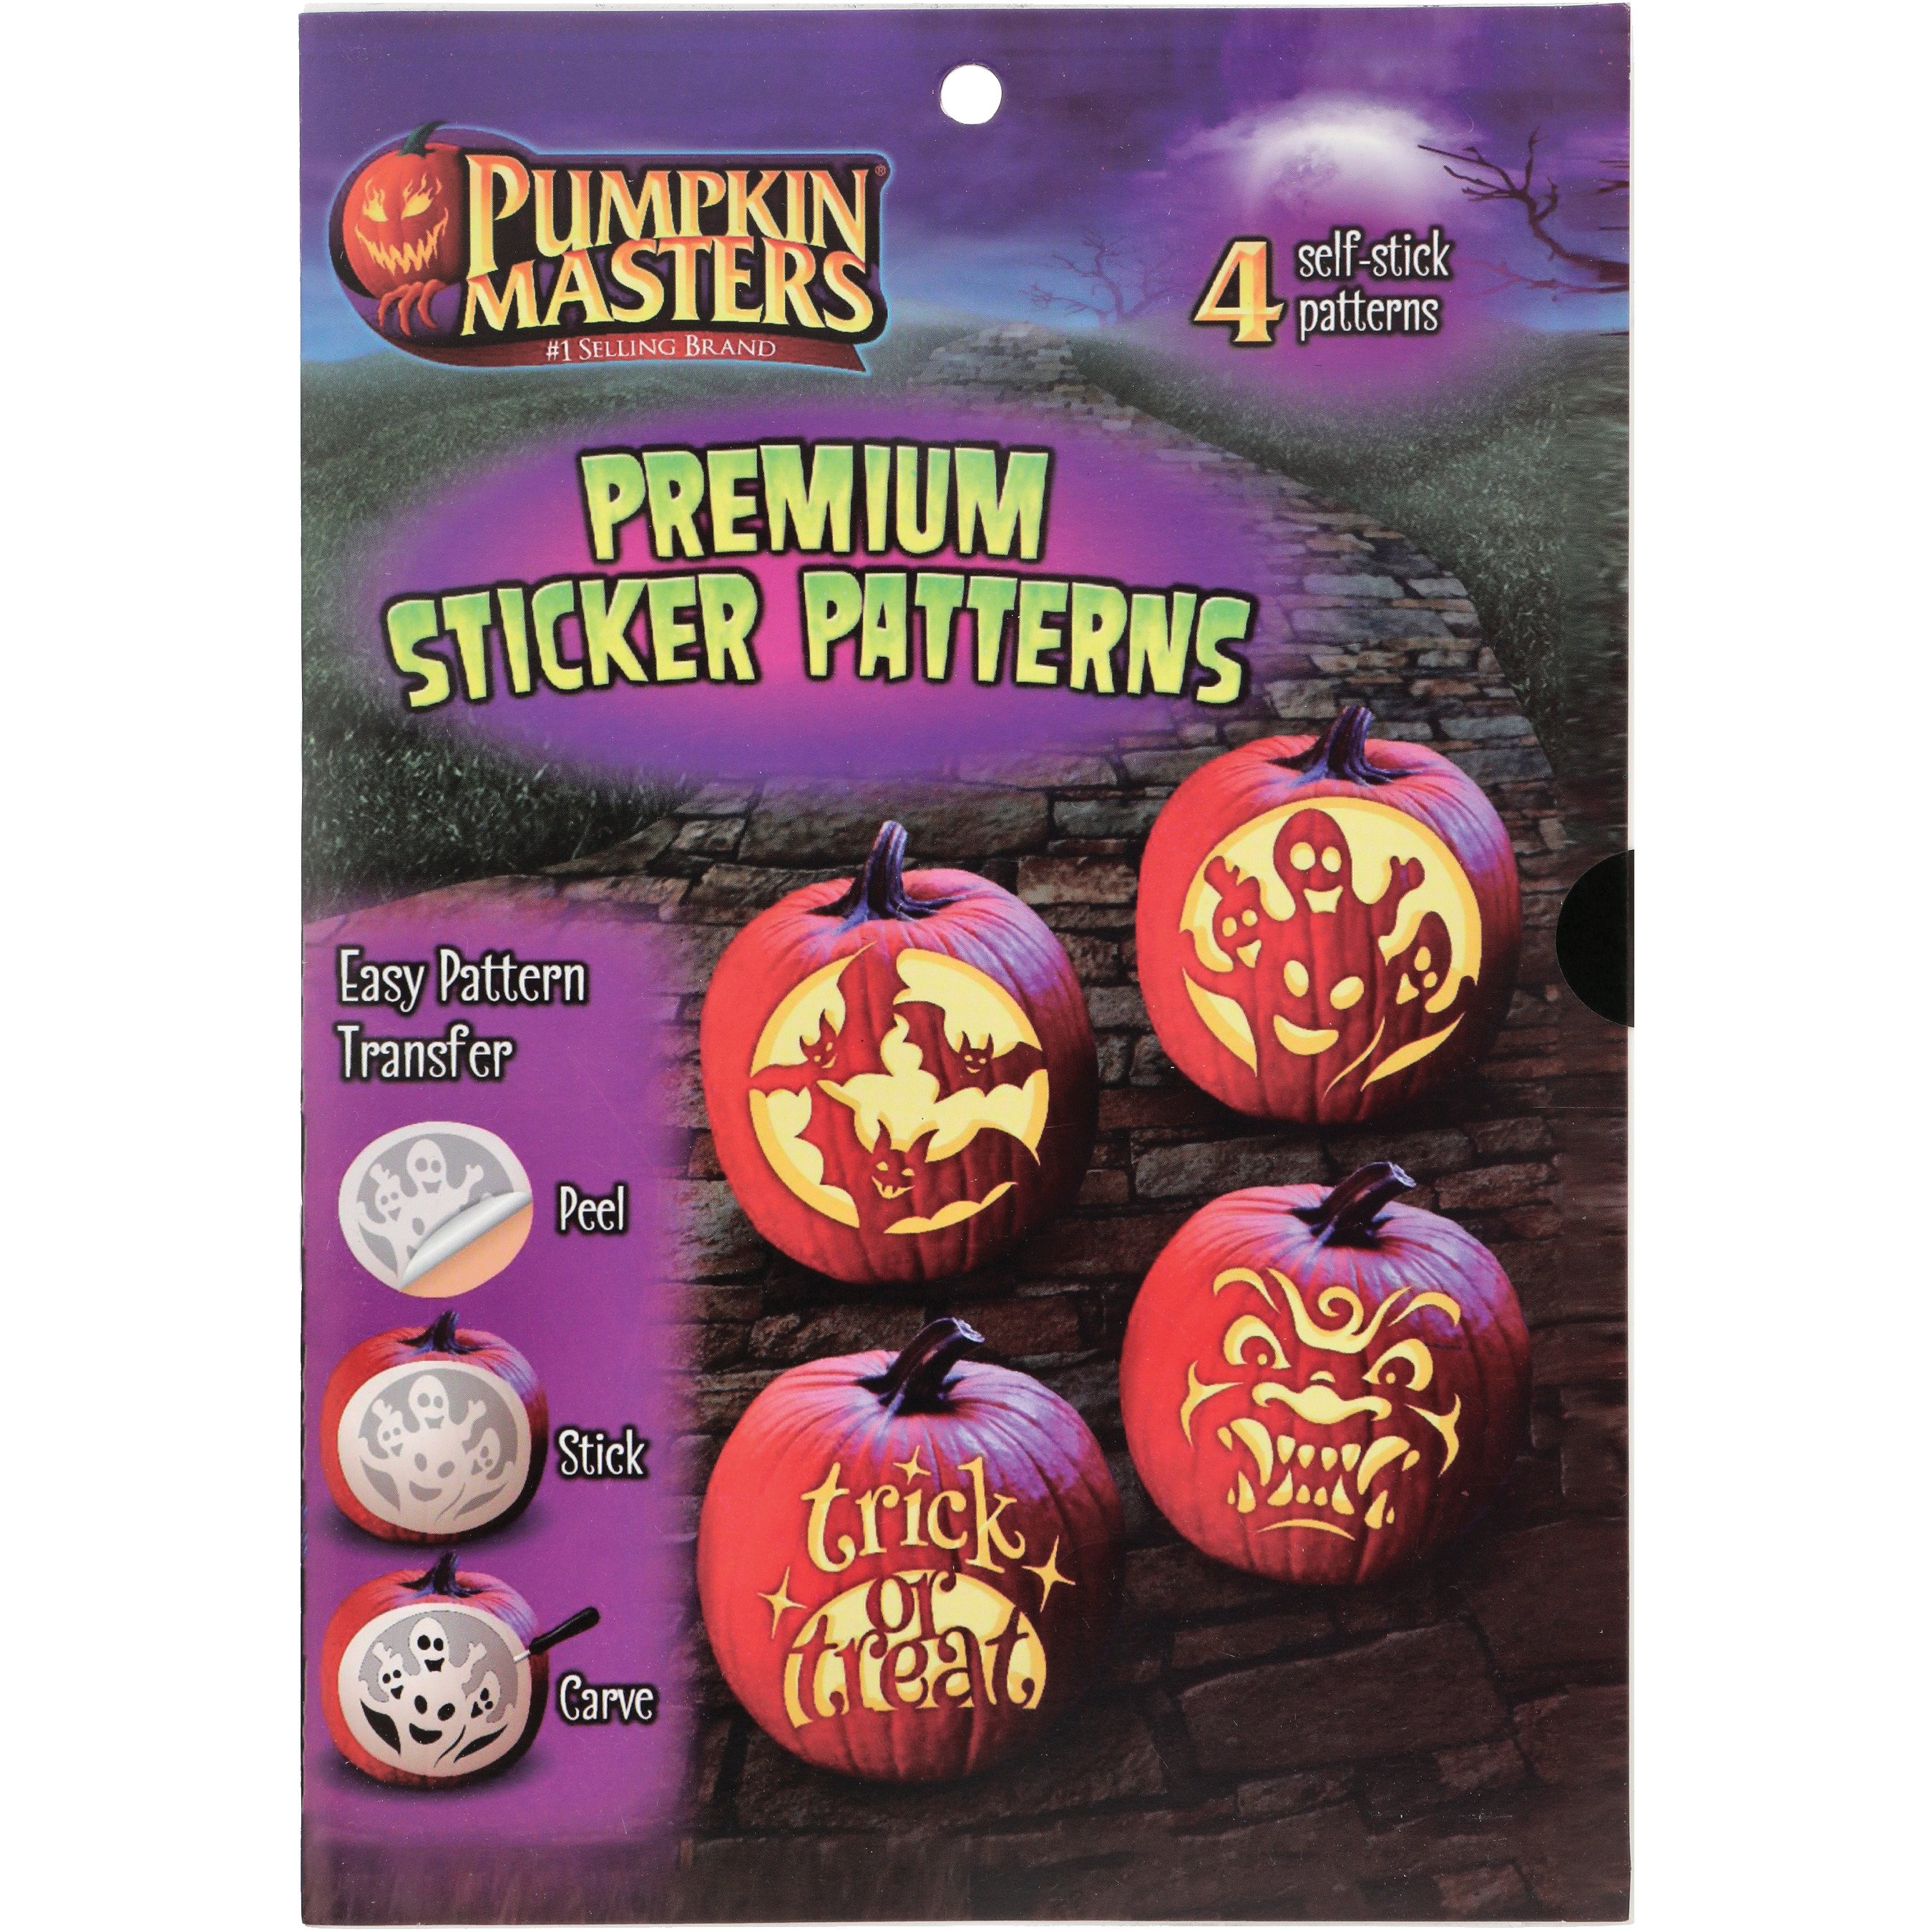 Pumpkin Masters Premium Sticker Patterns - Shop Seasonal Decor at H-E-B